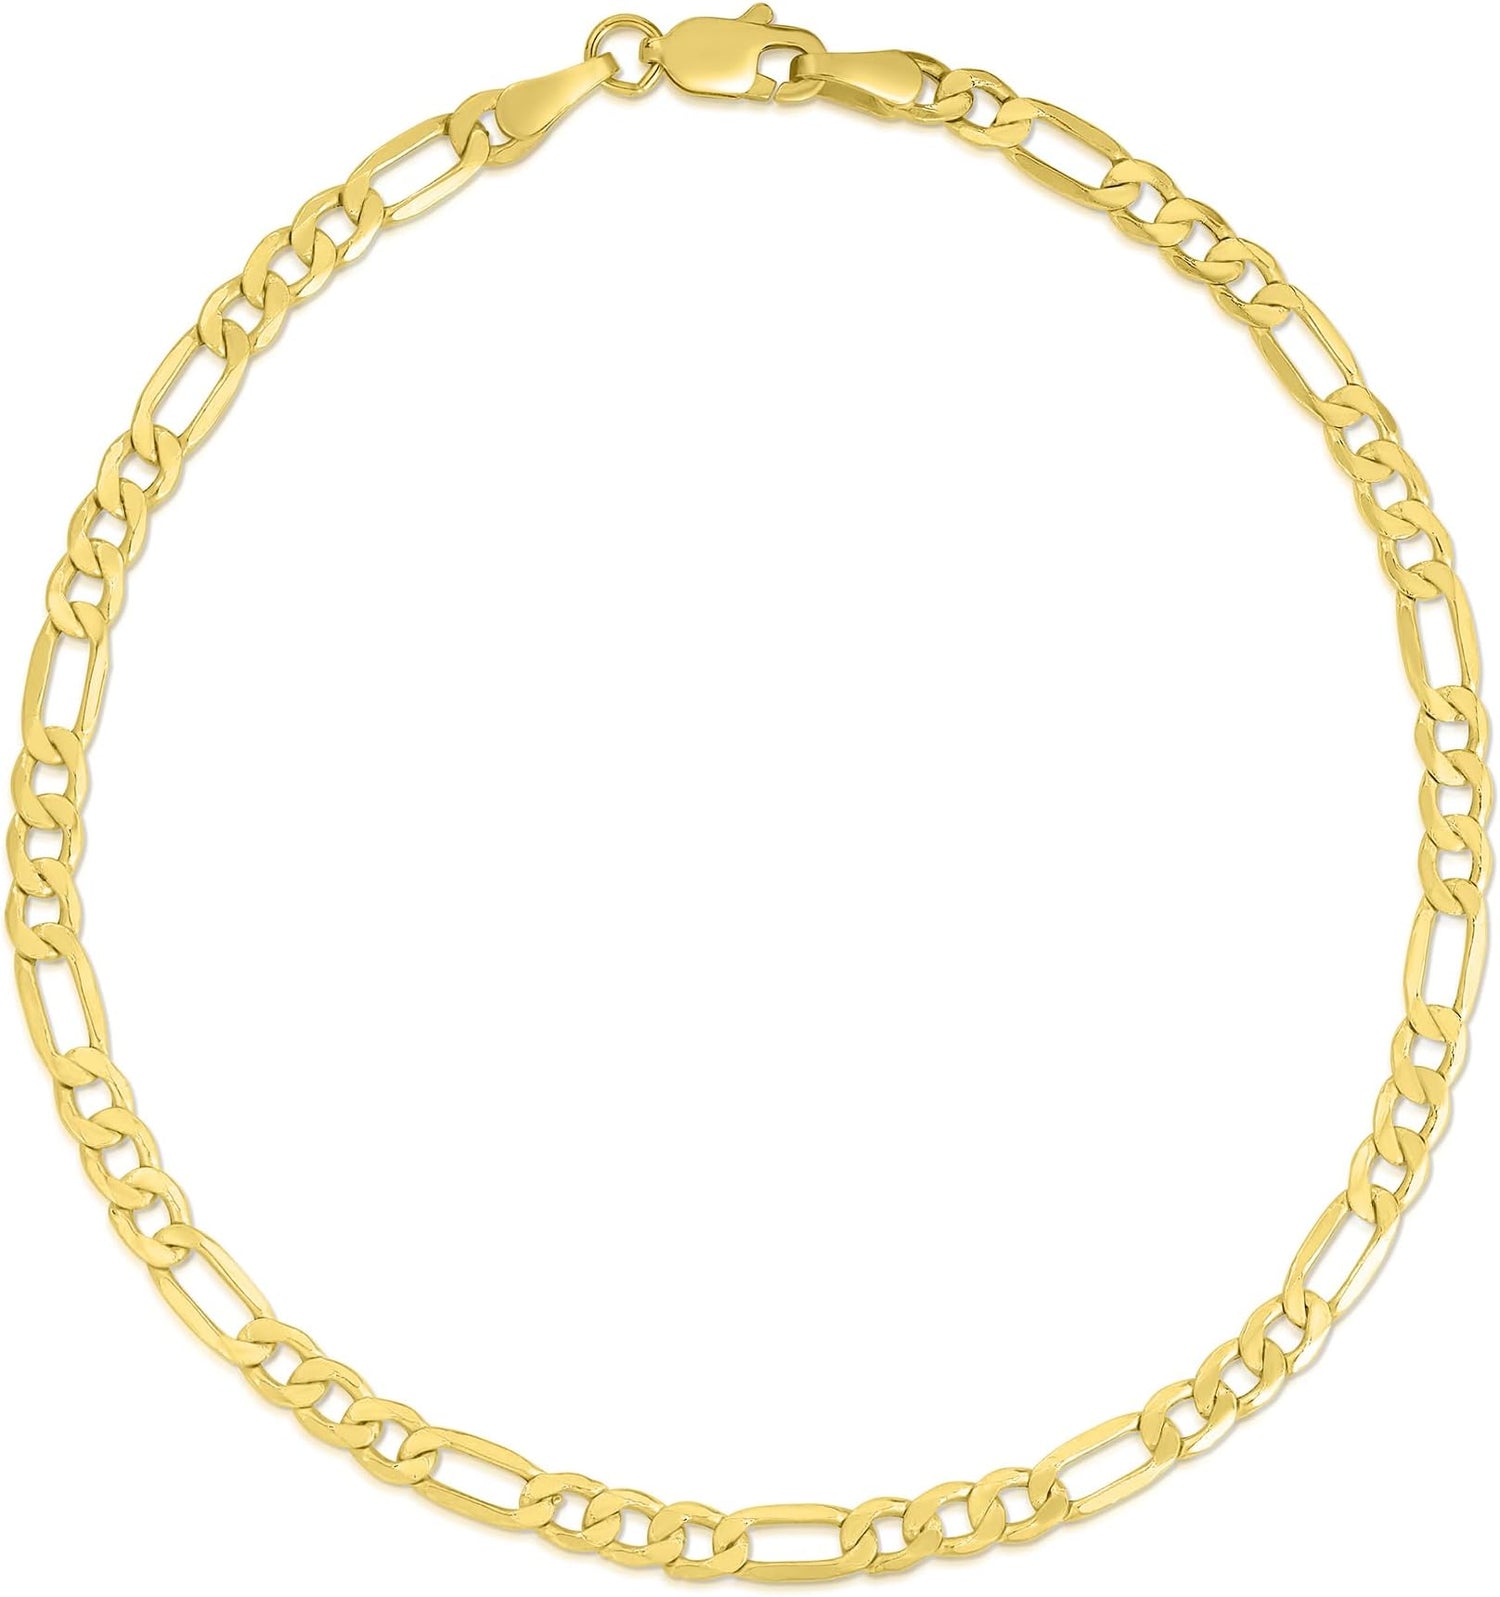 10k Yellow Gold 3.5mm Lite Figaro Chain Link Bracelet or Anklet